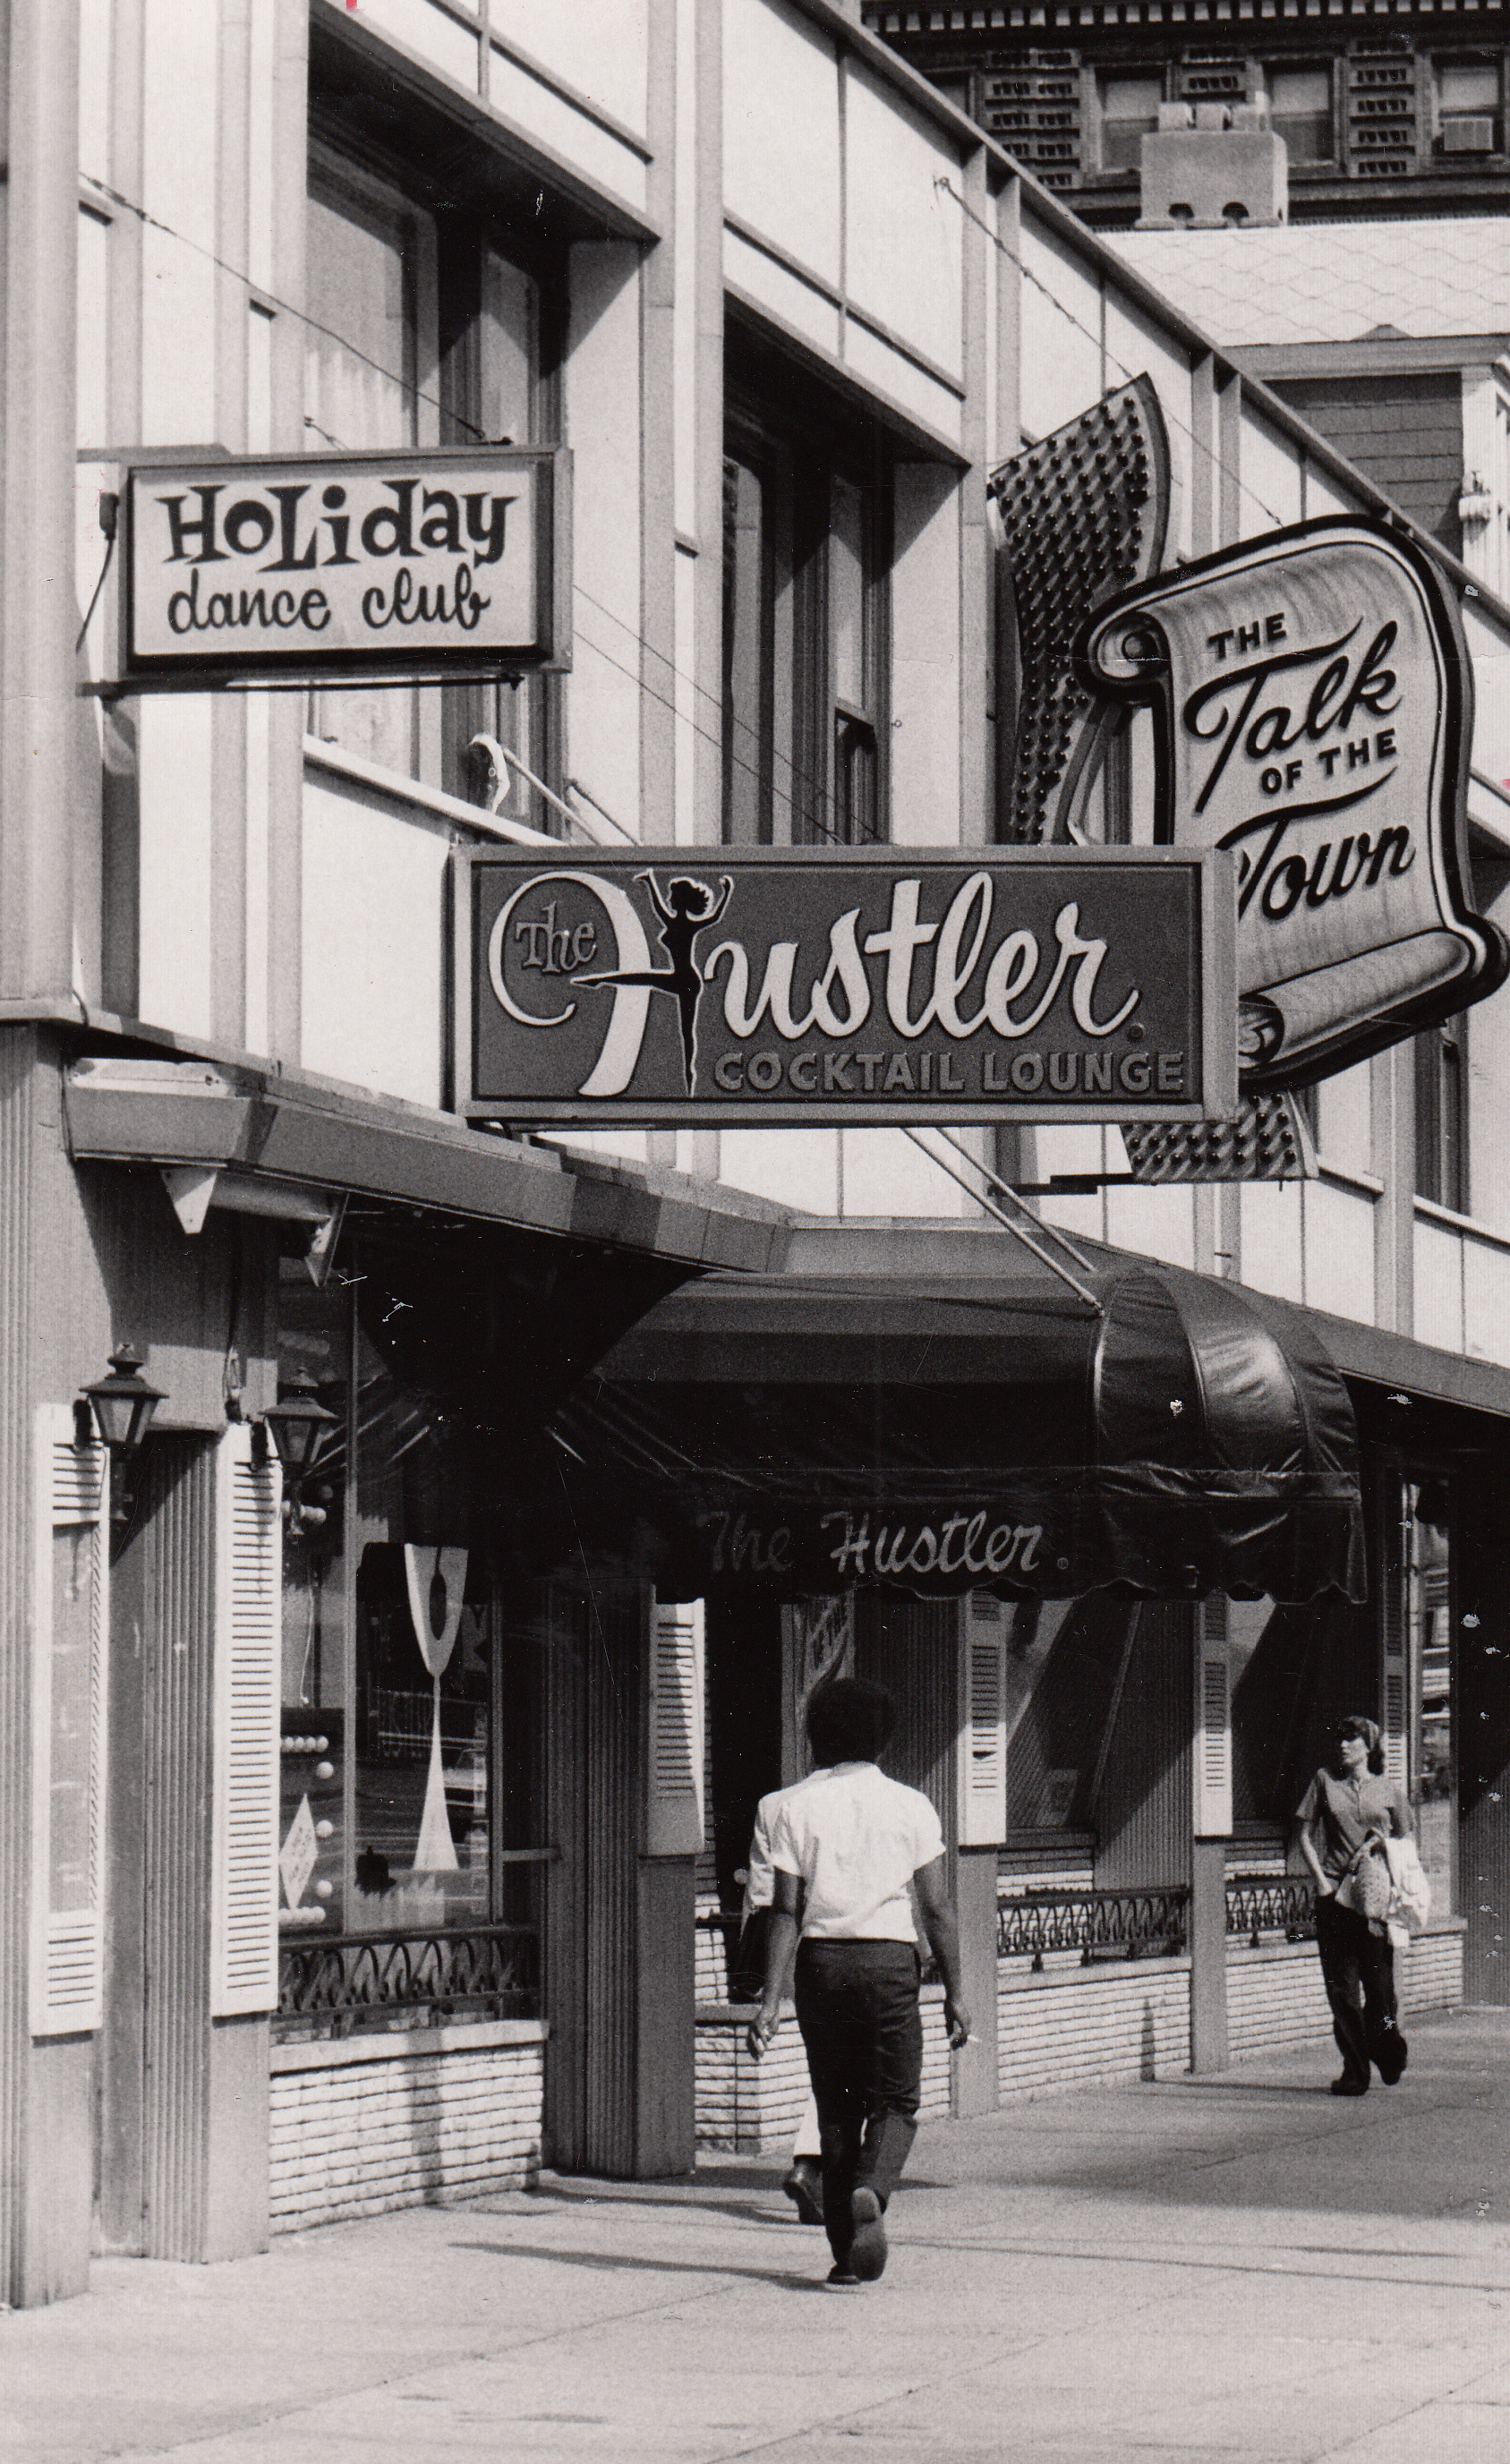 America's first Hustler Club. The Hustler Cocktail Lounge, Dayton, OH, August, 1973.